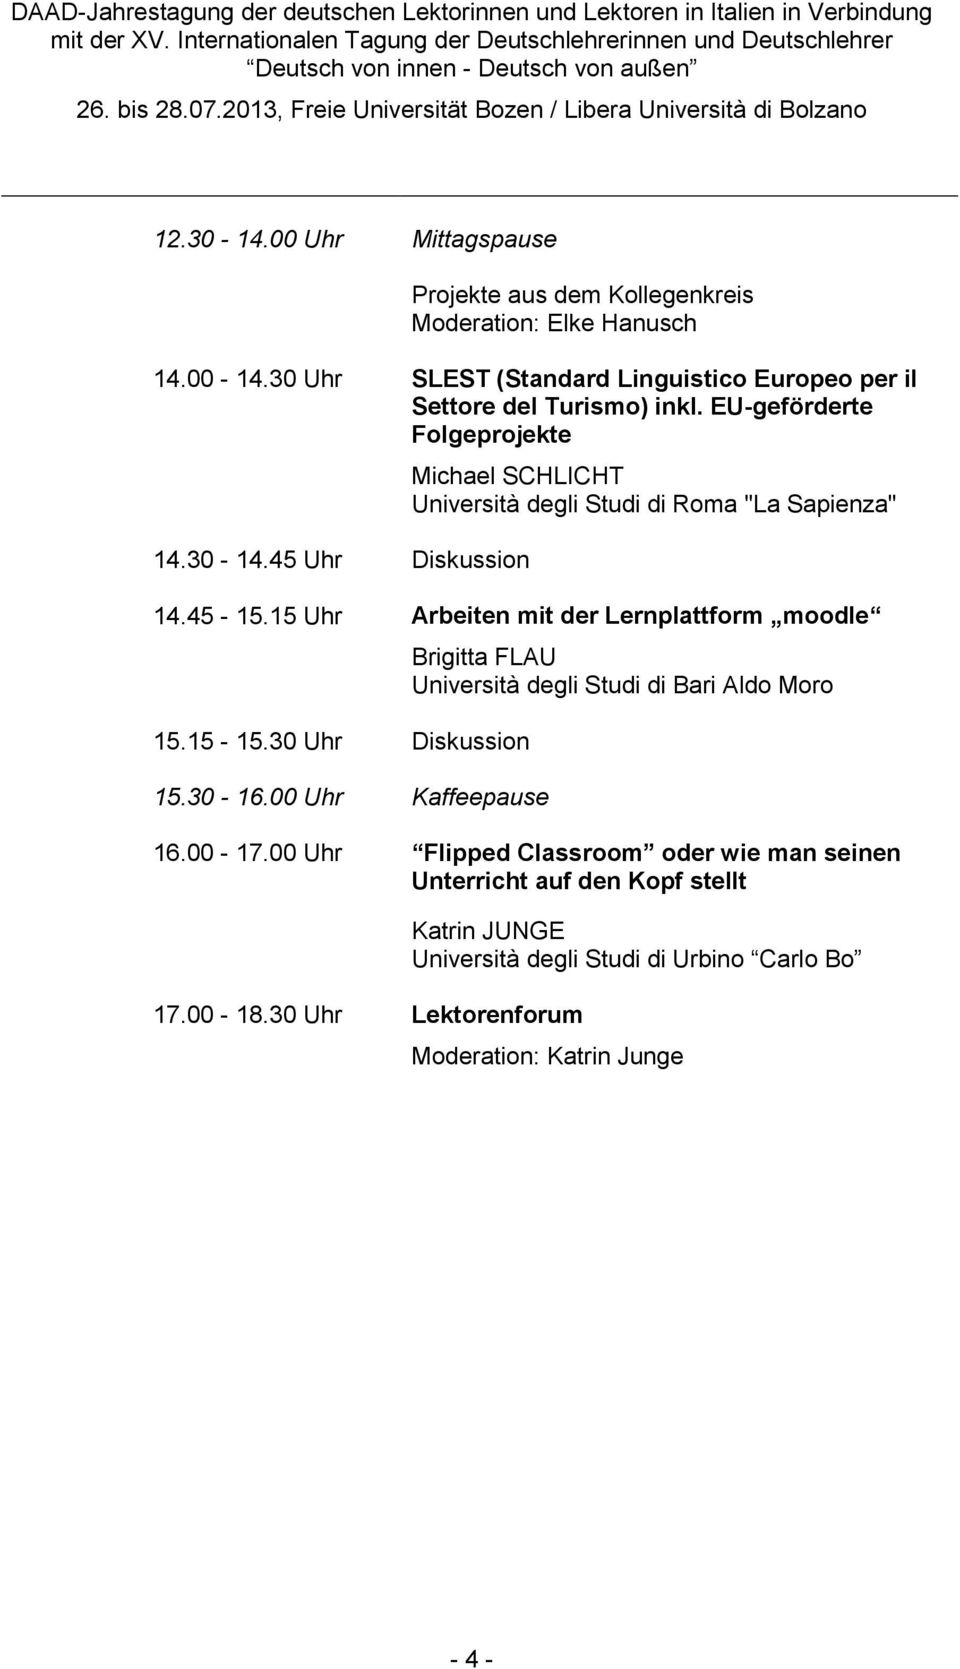 45 Uhr Diskussion Michael SCHLICHT Università degli Studi di Roma "La Sapienza" 14.45-15.15 Uhr Arbeiten mit der Lernplattform moodle 15.15-15.